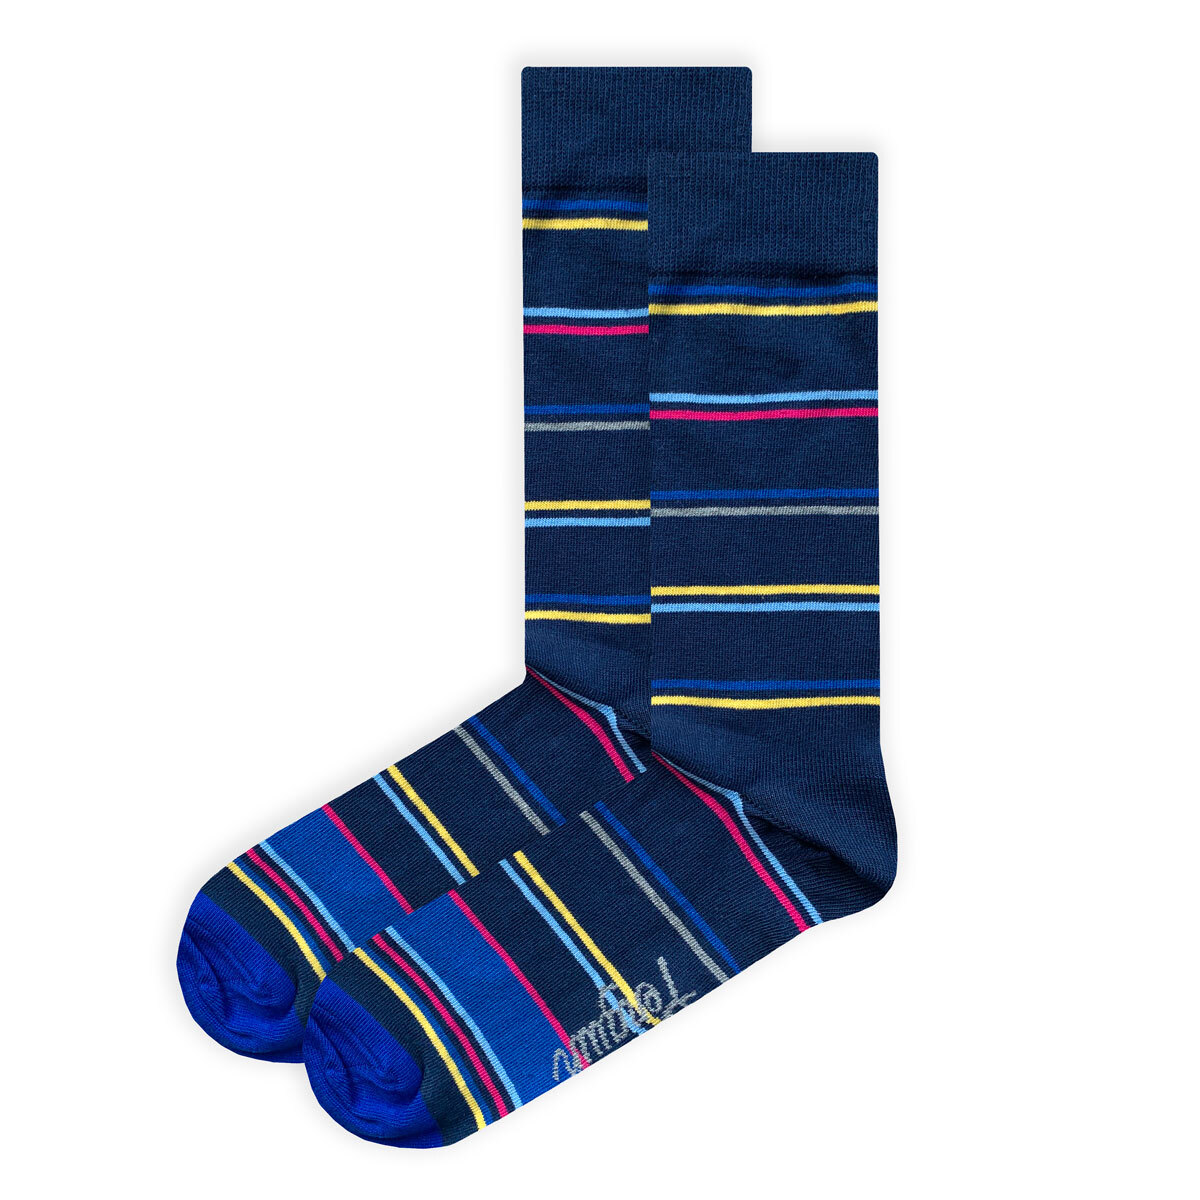 Original Penguin Men's Striped Socks, 6 Pack in Grey, Blue and Navy